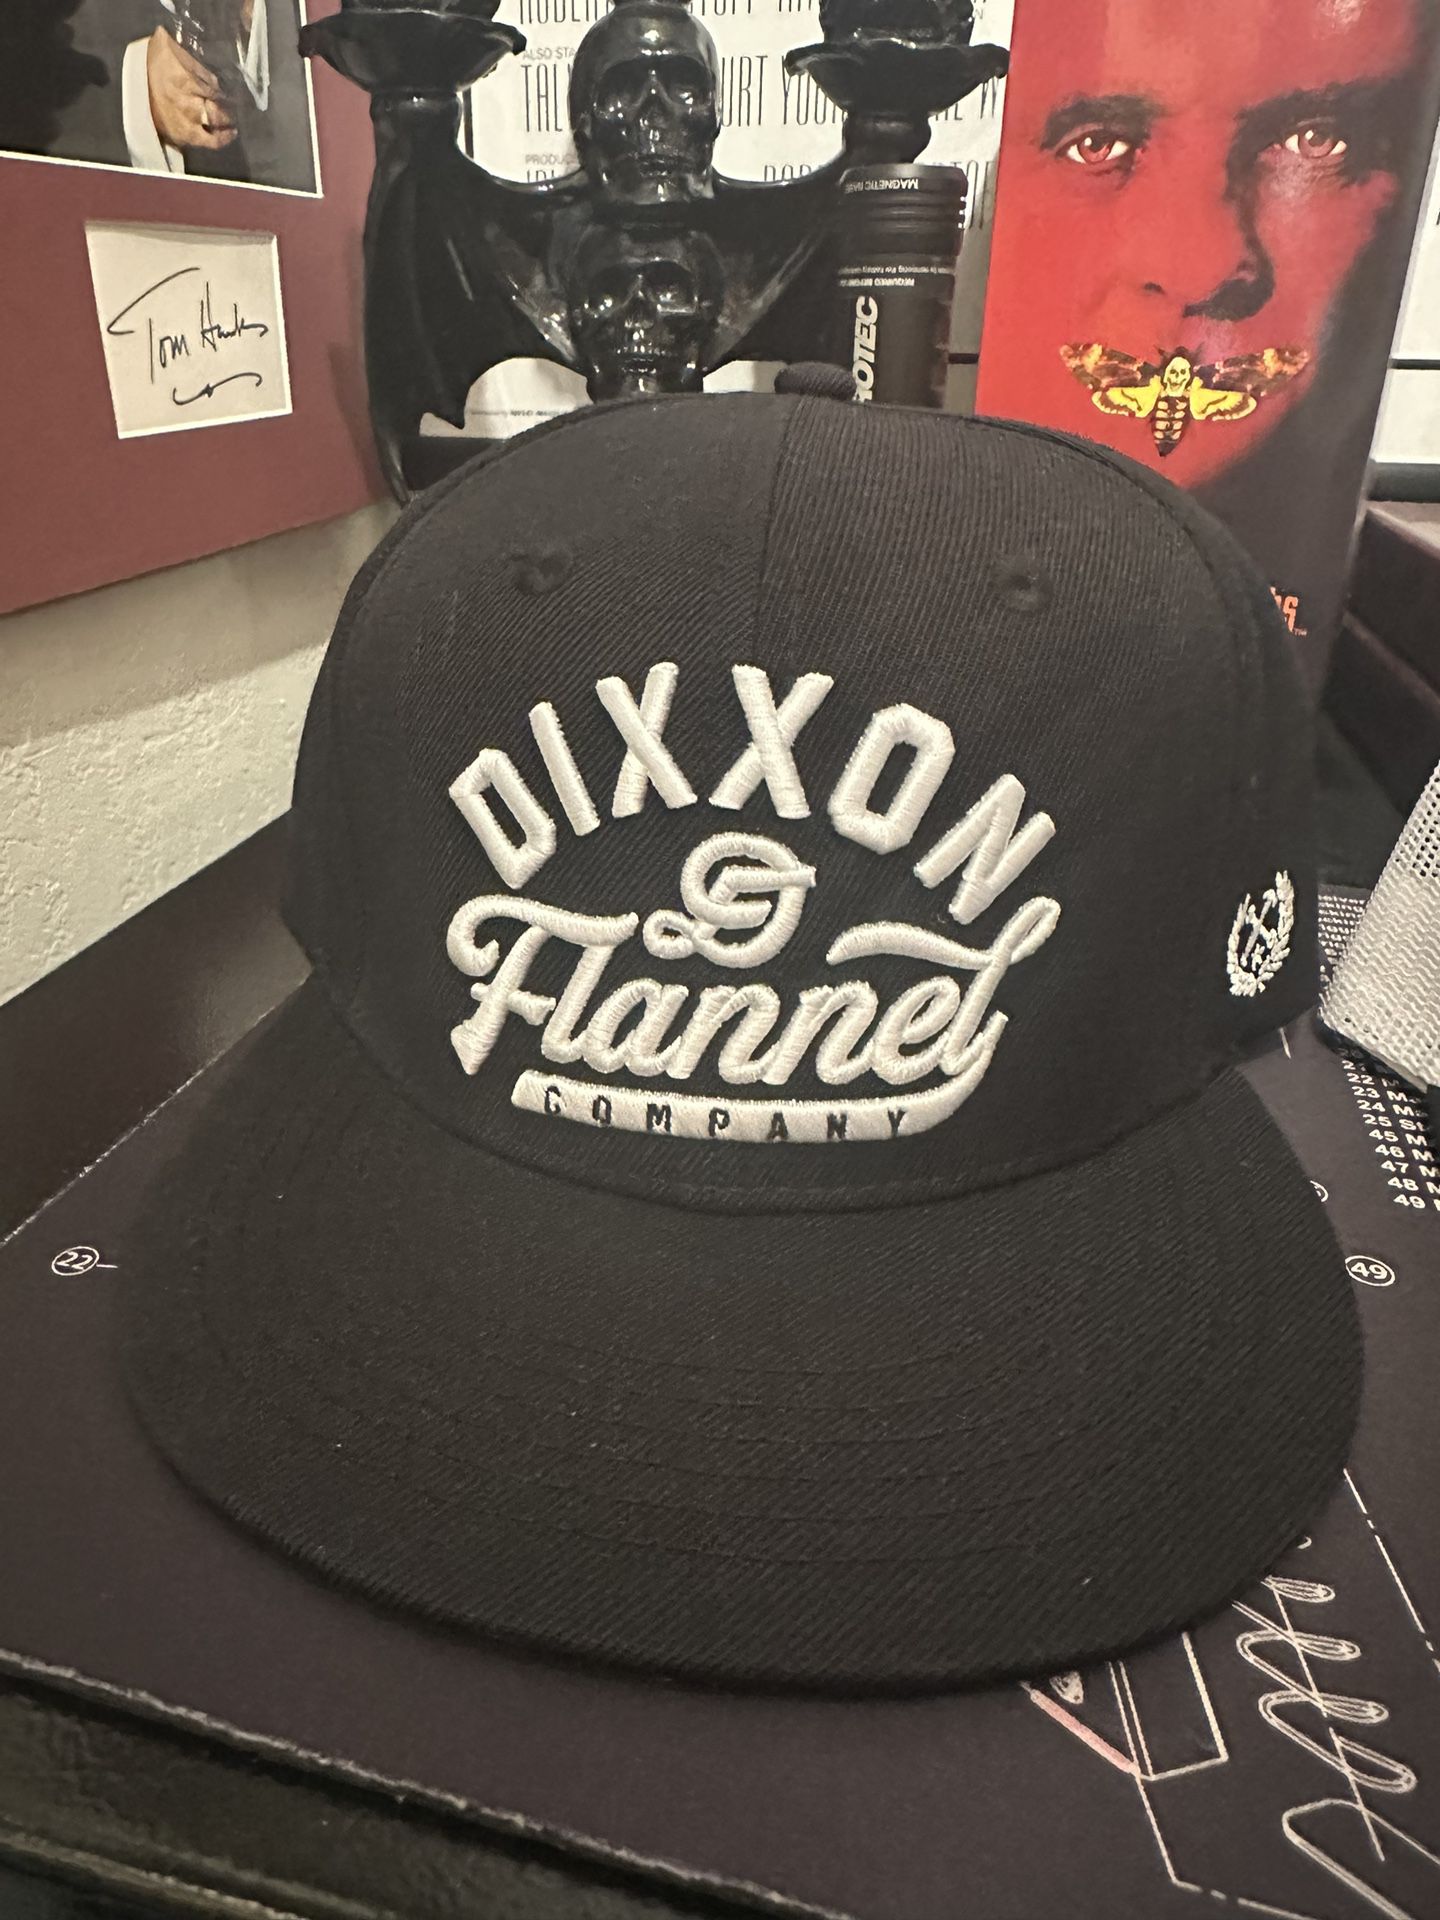 NEW Dixxon Hat Never Worn 